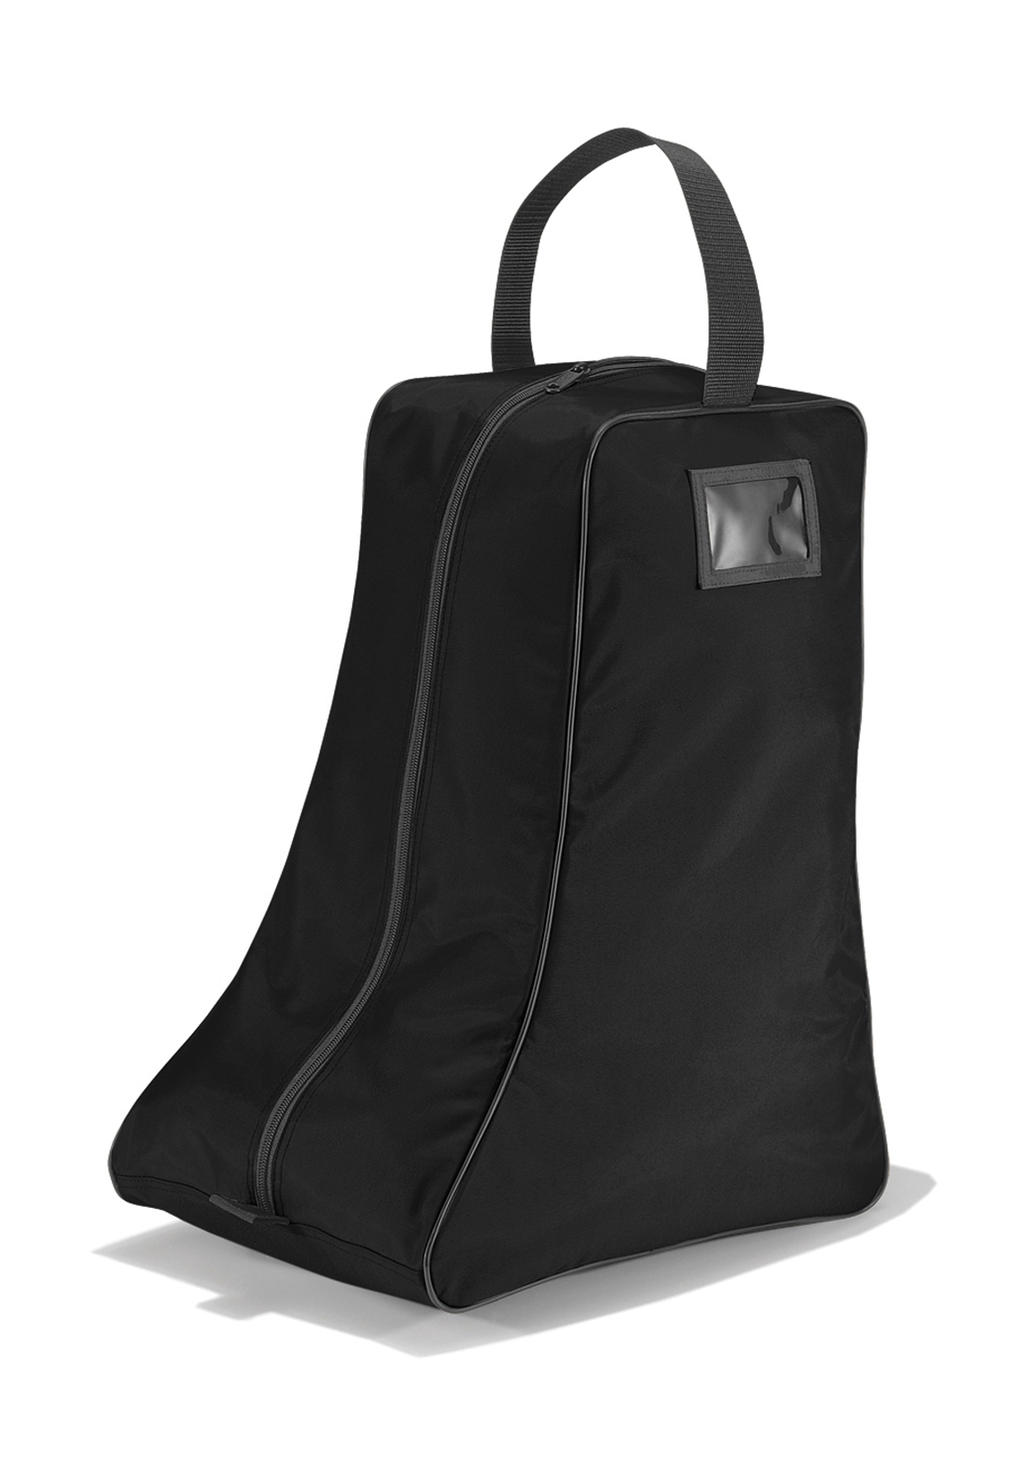  Boots Bag in Farbe Black/Graphite Grey